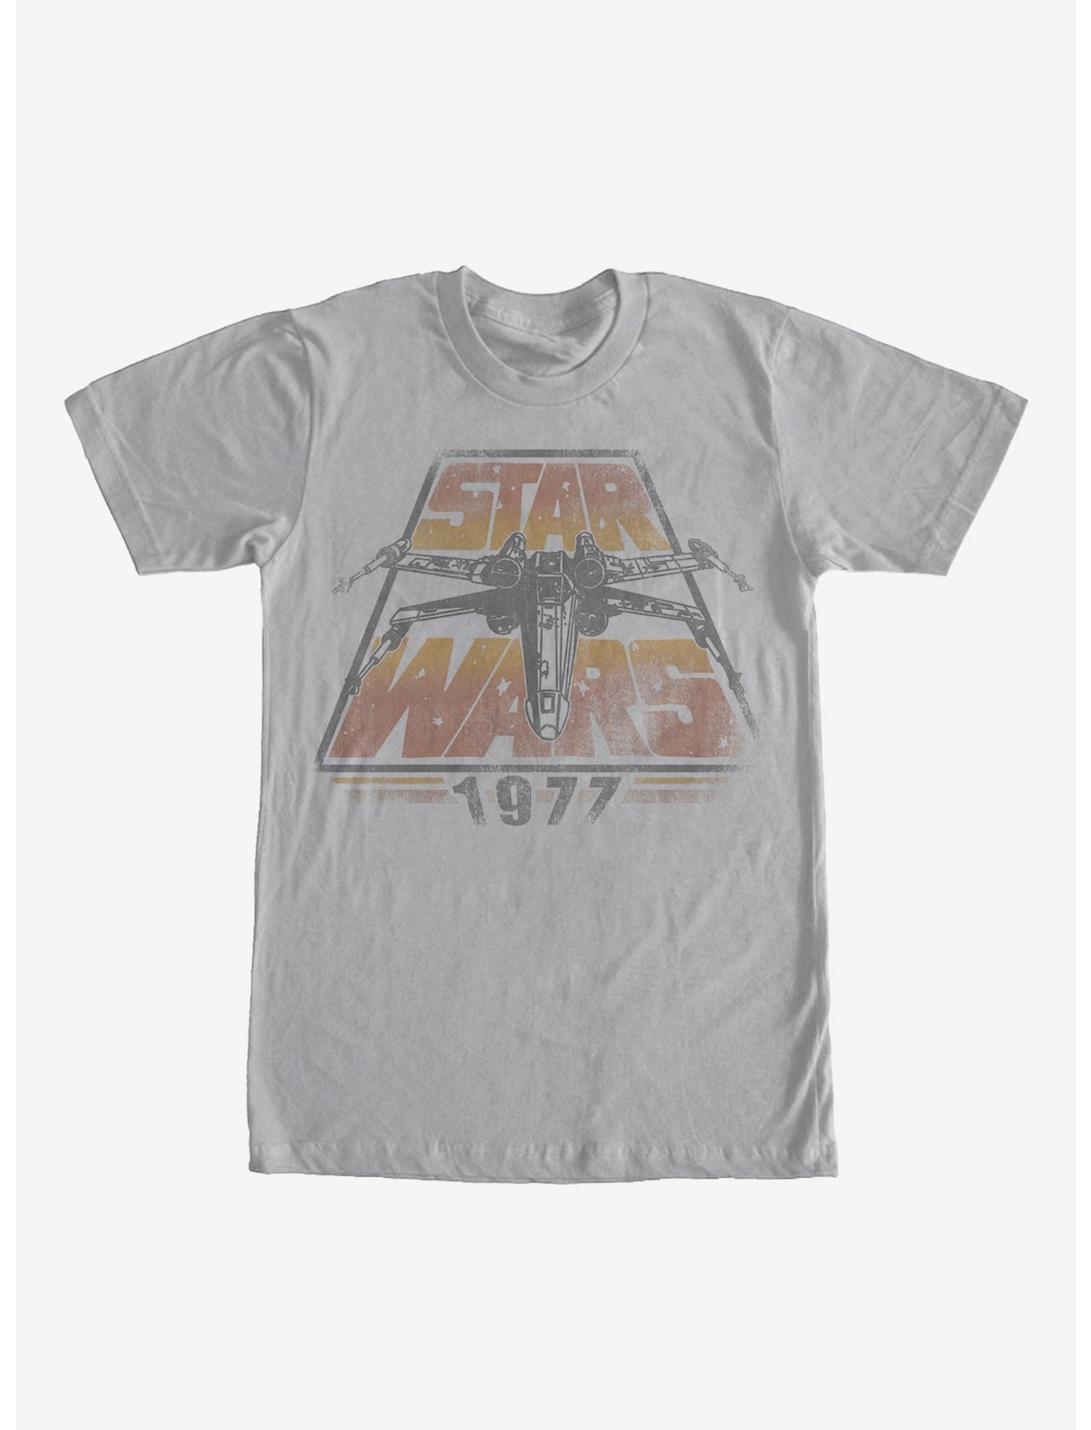 Star Wars 1977 Time Warp T-Shirt, SILVER, hi-res